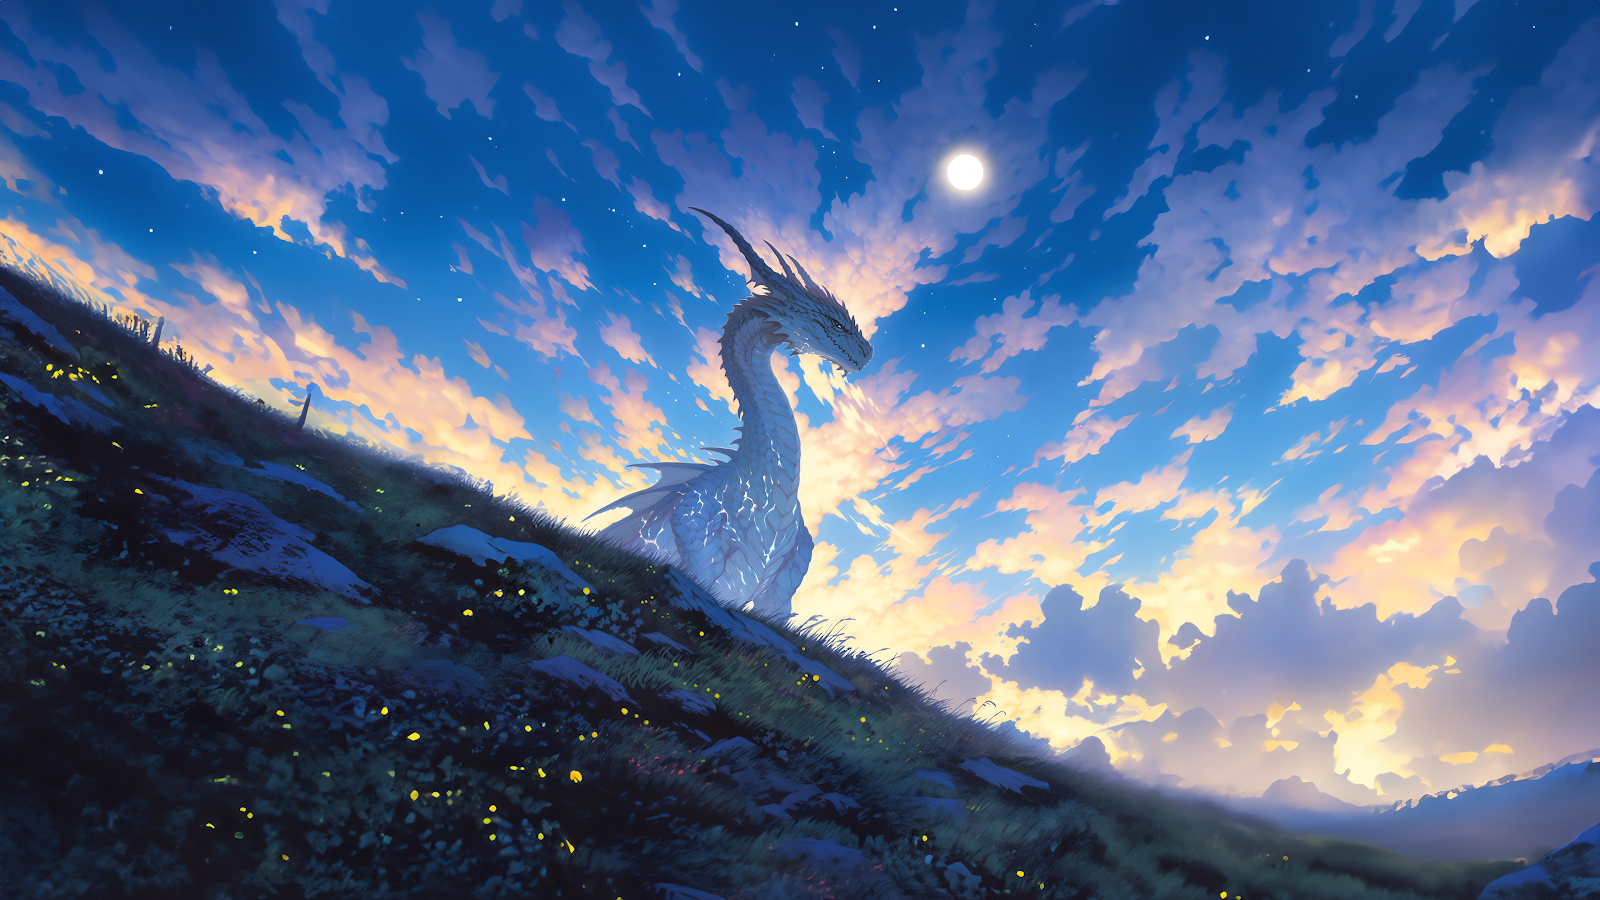 Legendary Dragon's Realm: 4K Desktop Wallpaper for Anime Enthusiasts